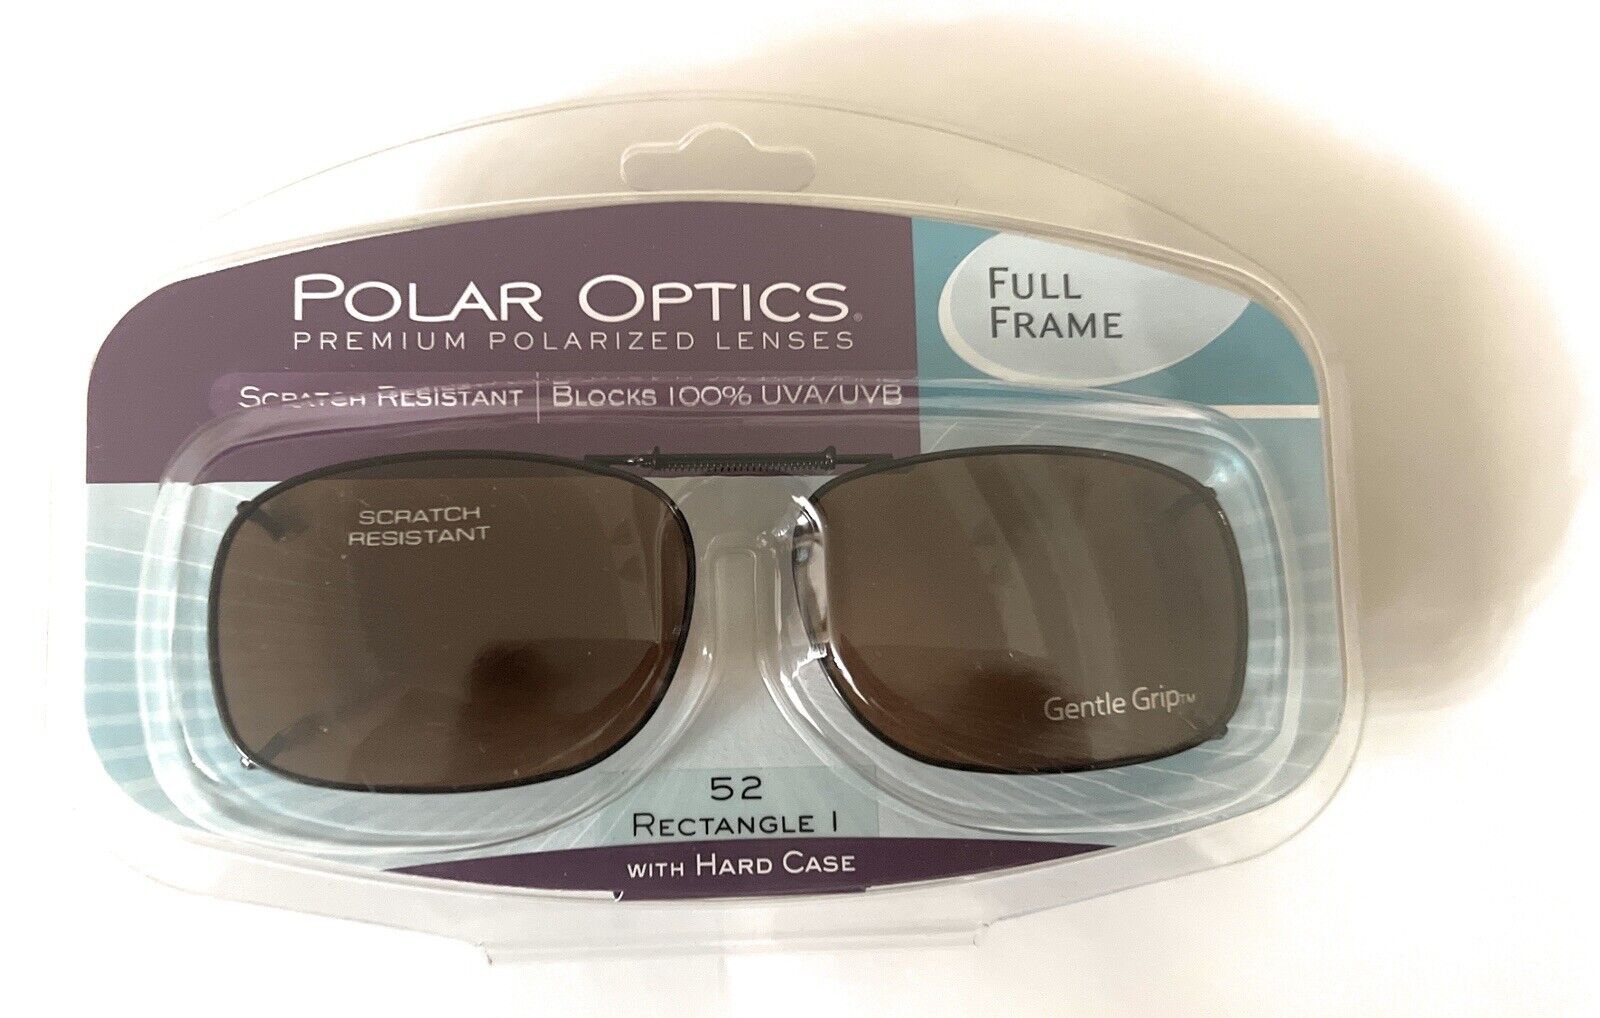 Polar Optics Polarized Clip On Sunglasses w/Hard Case, 52 Rec 1 full frame Amber